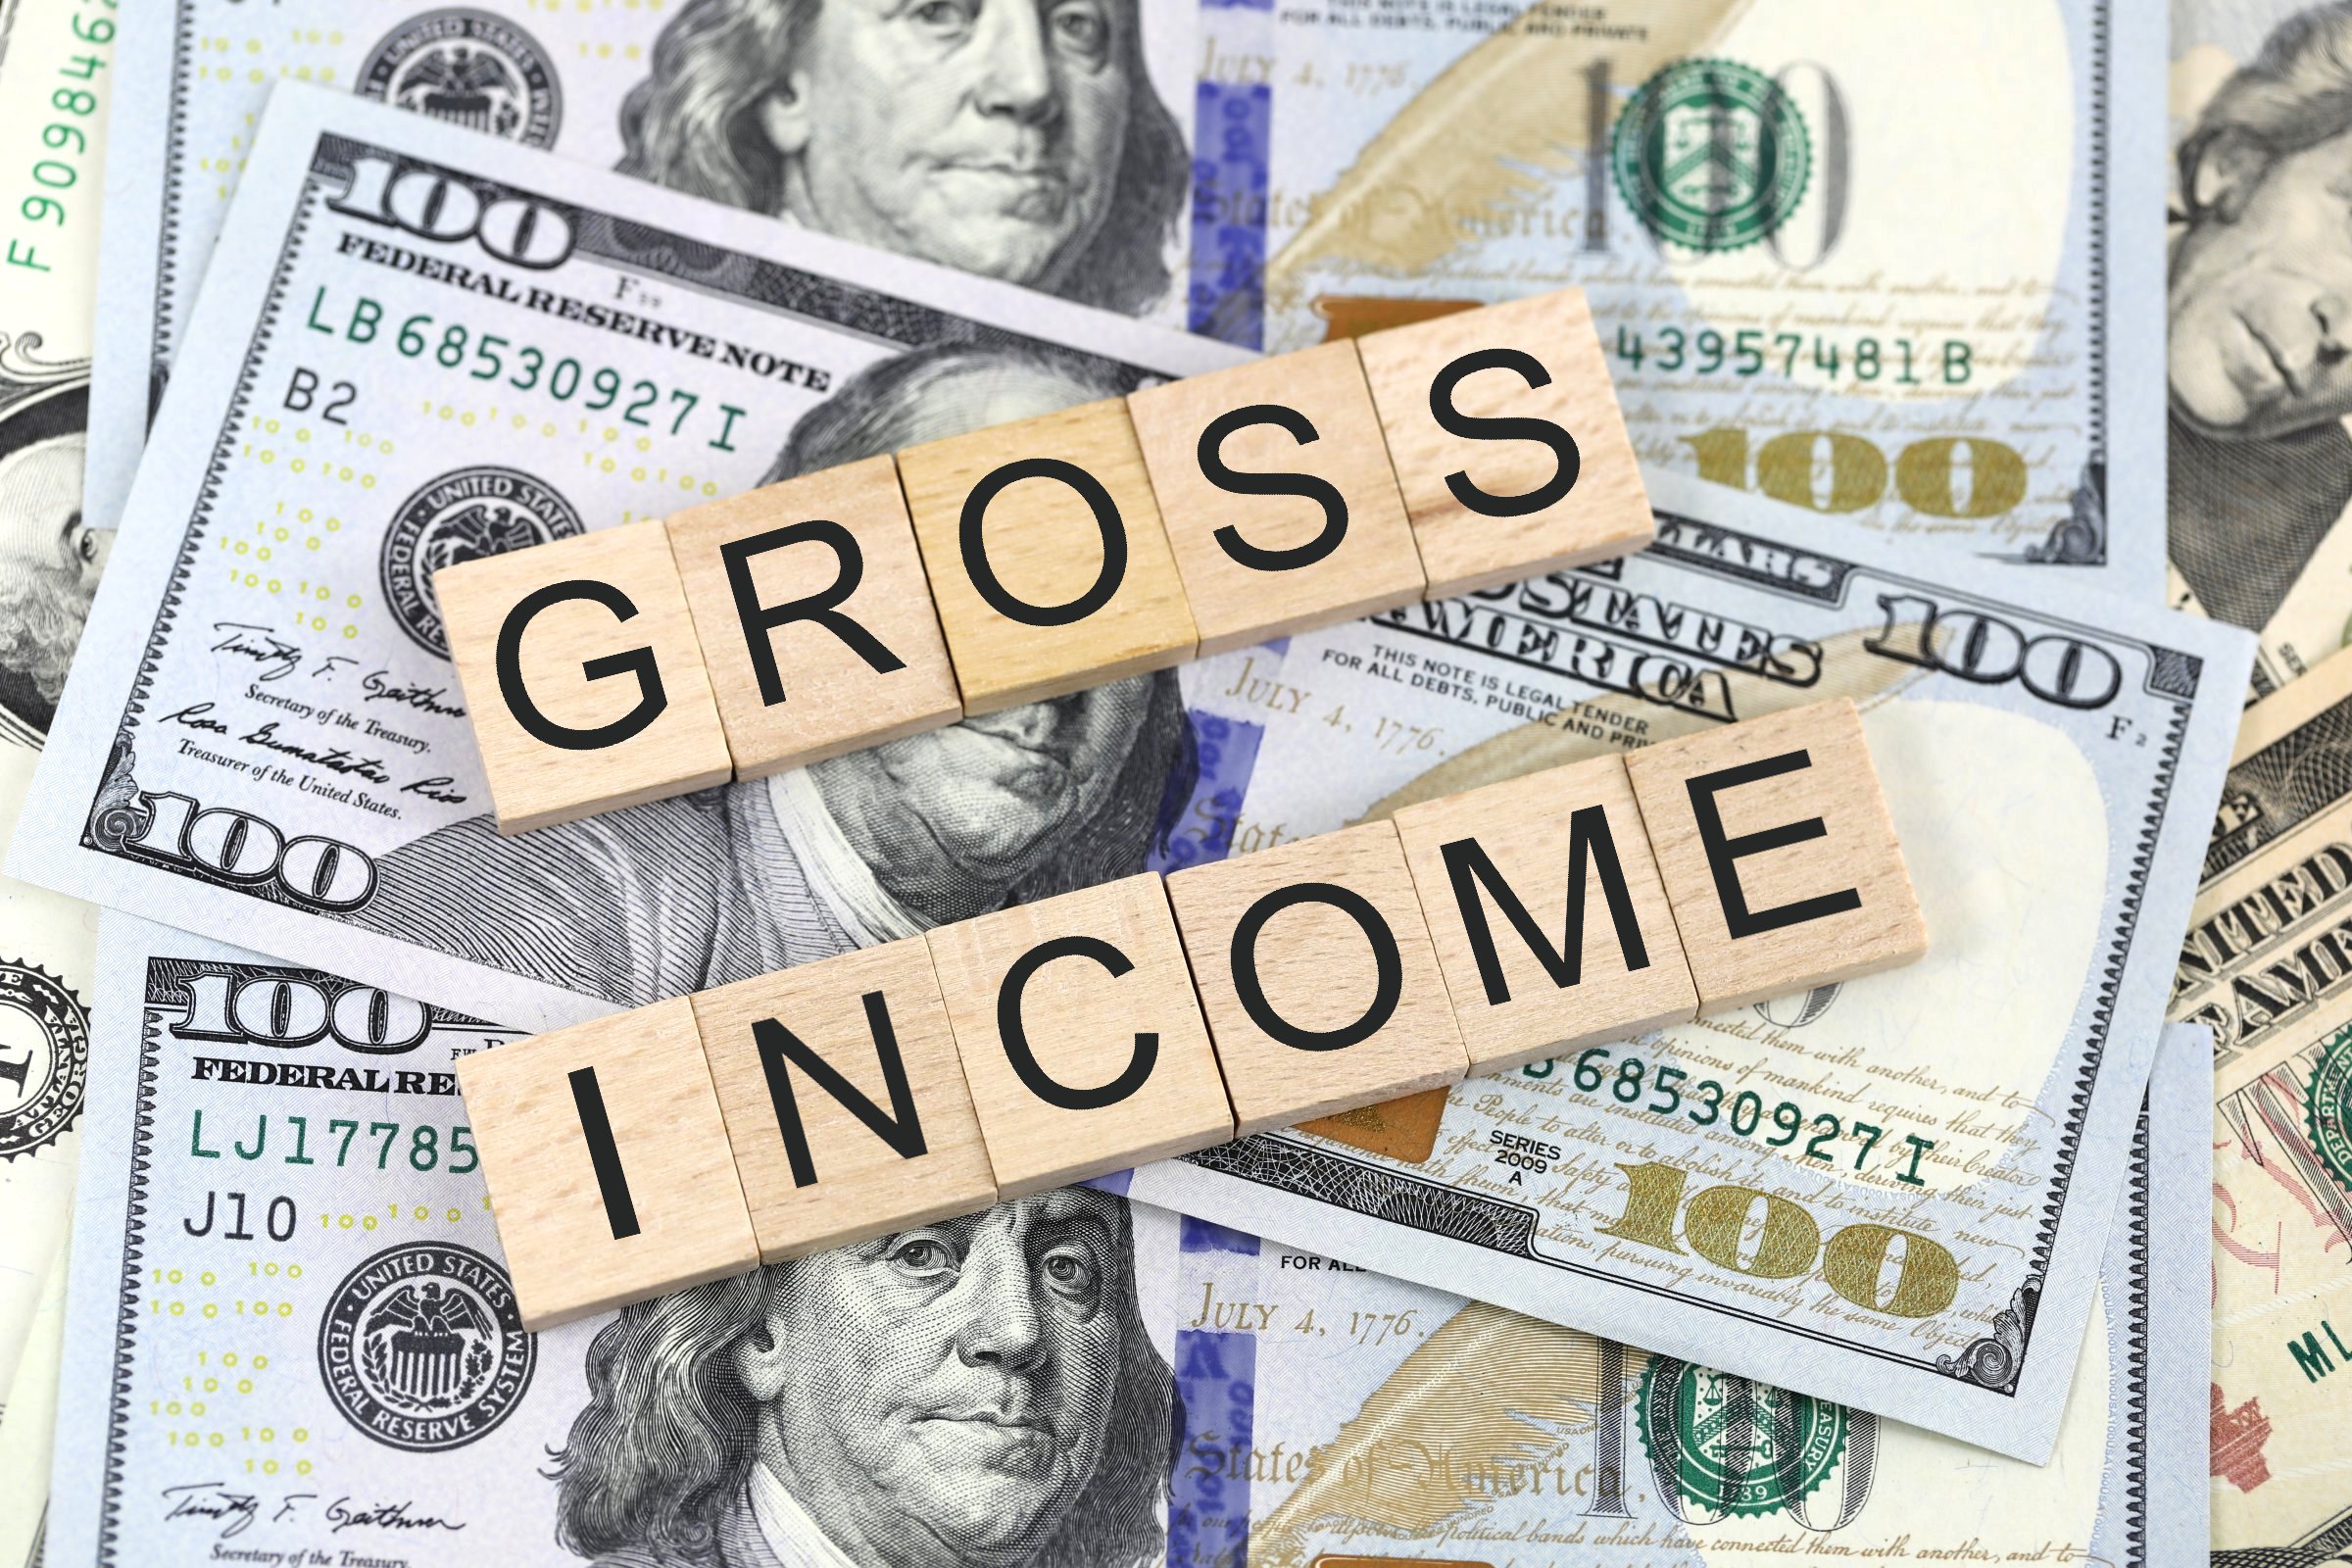 gross income